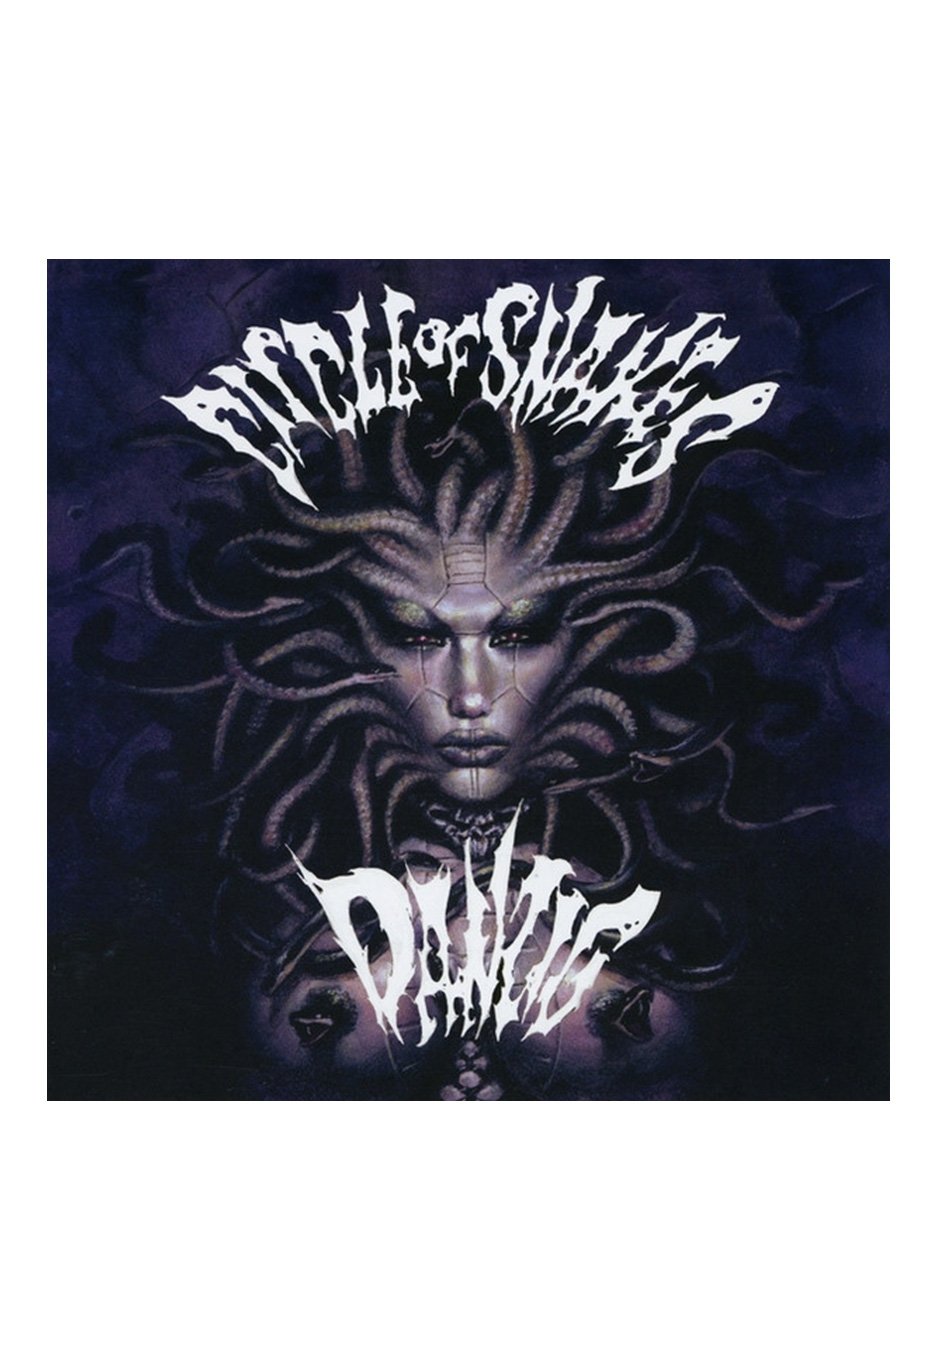 Danzig - Circle Of Snakes Black/Purple Haze - Colored Vinyl